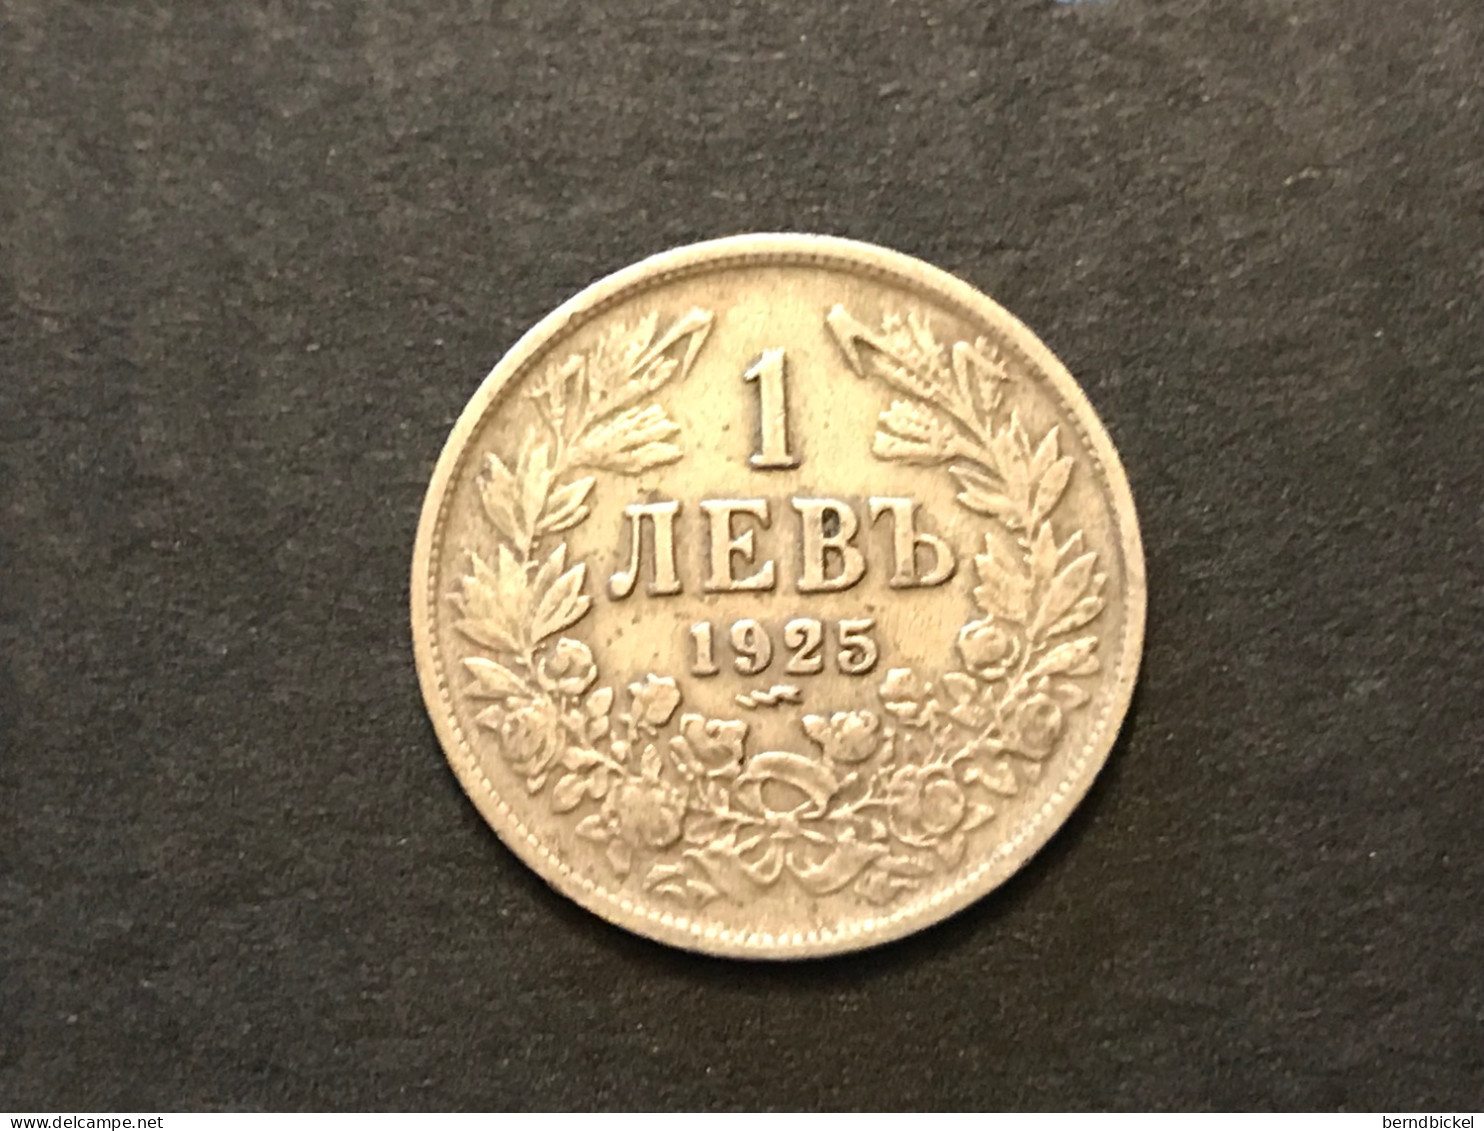 Münze Münzen Umlaufmünze Bulgarien 1 Lew 1925 Münzzeichen Blitz - Bulgarije